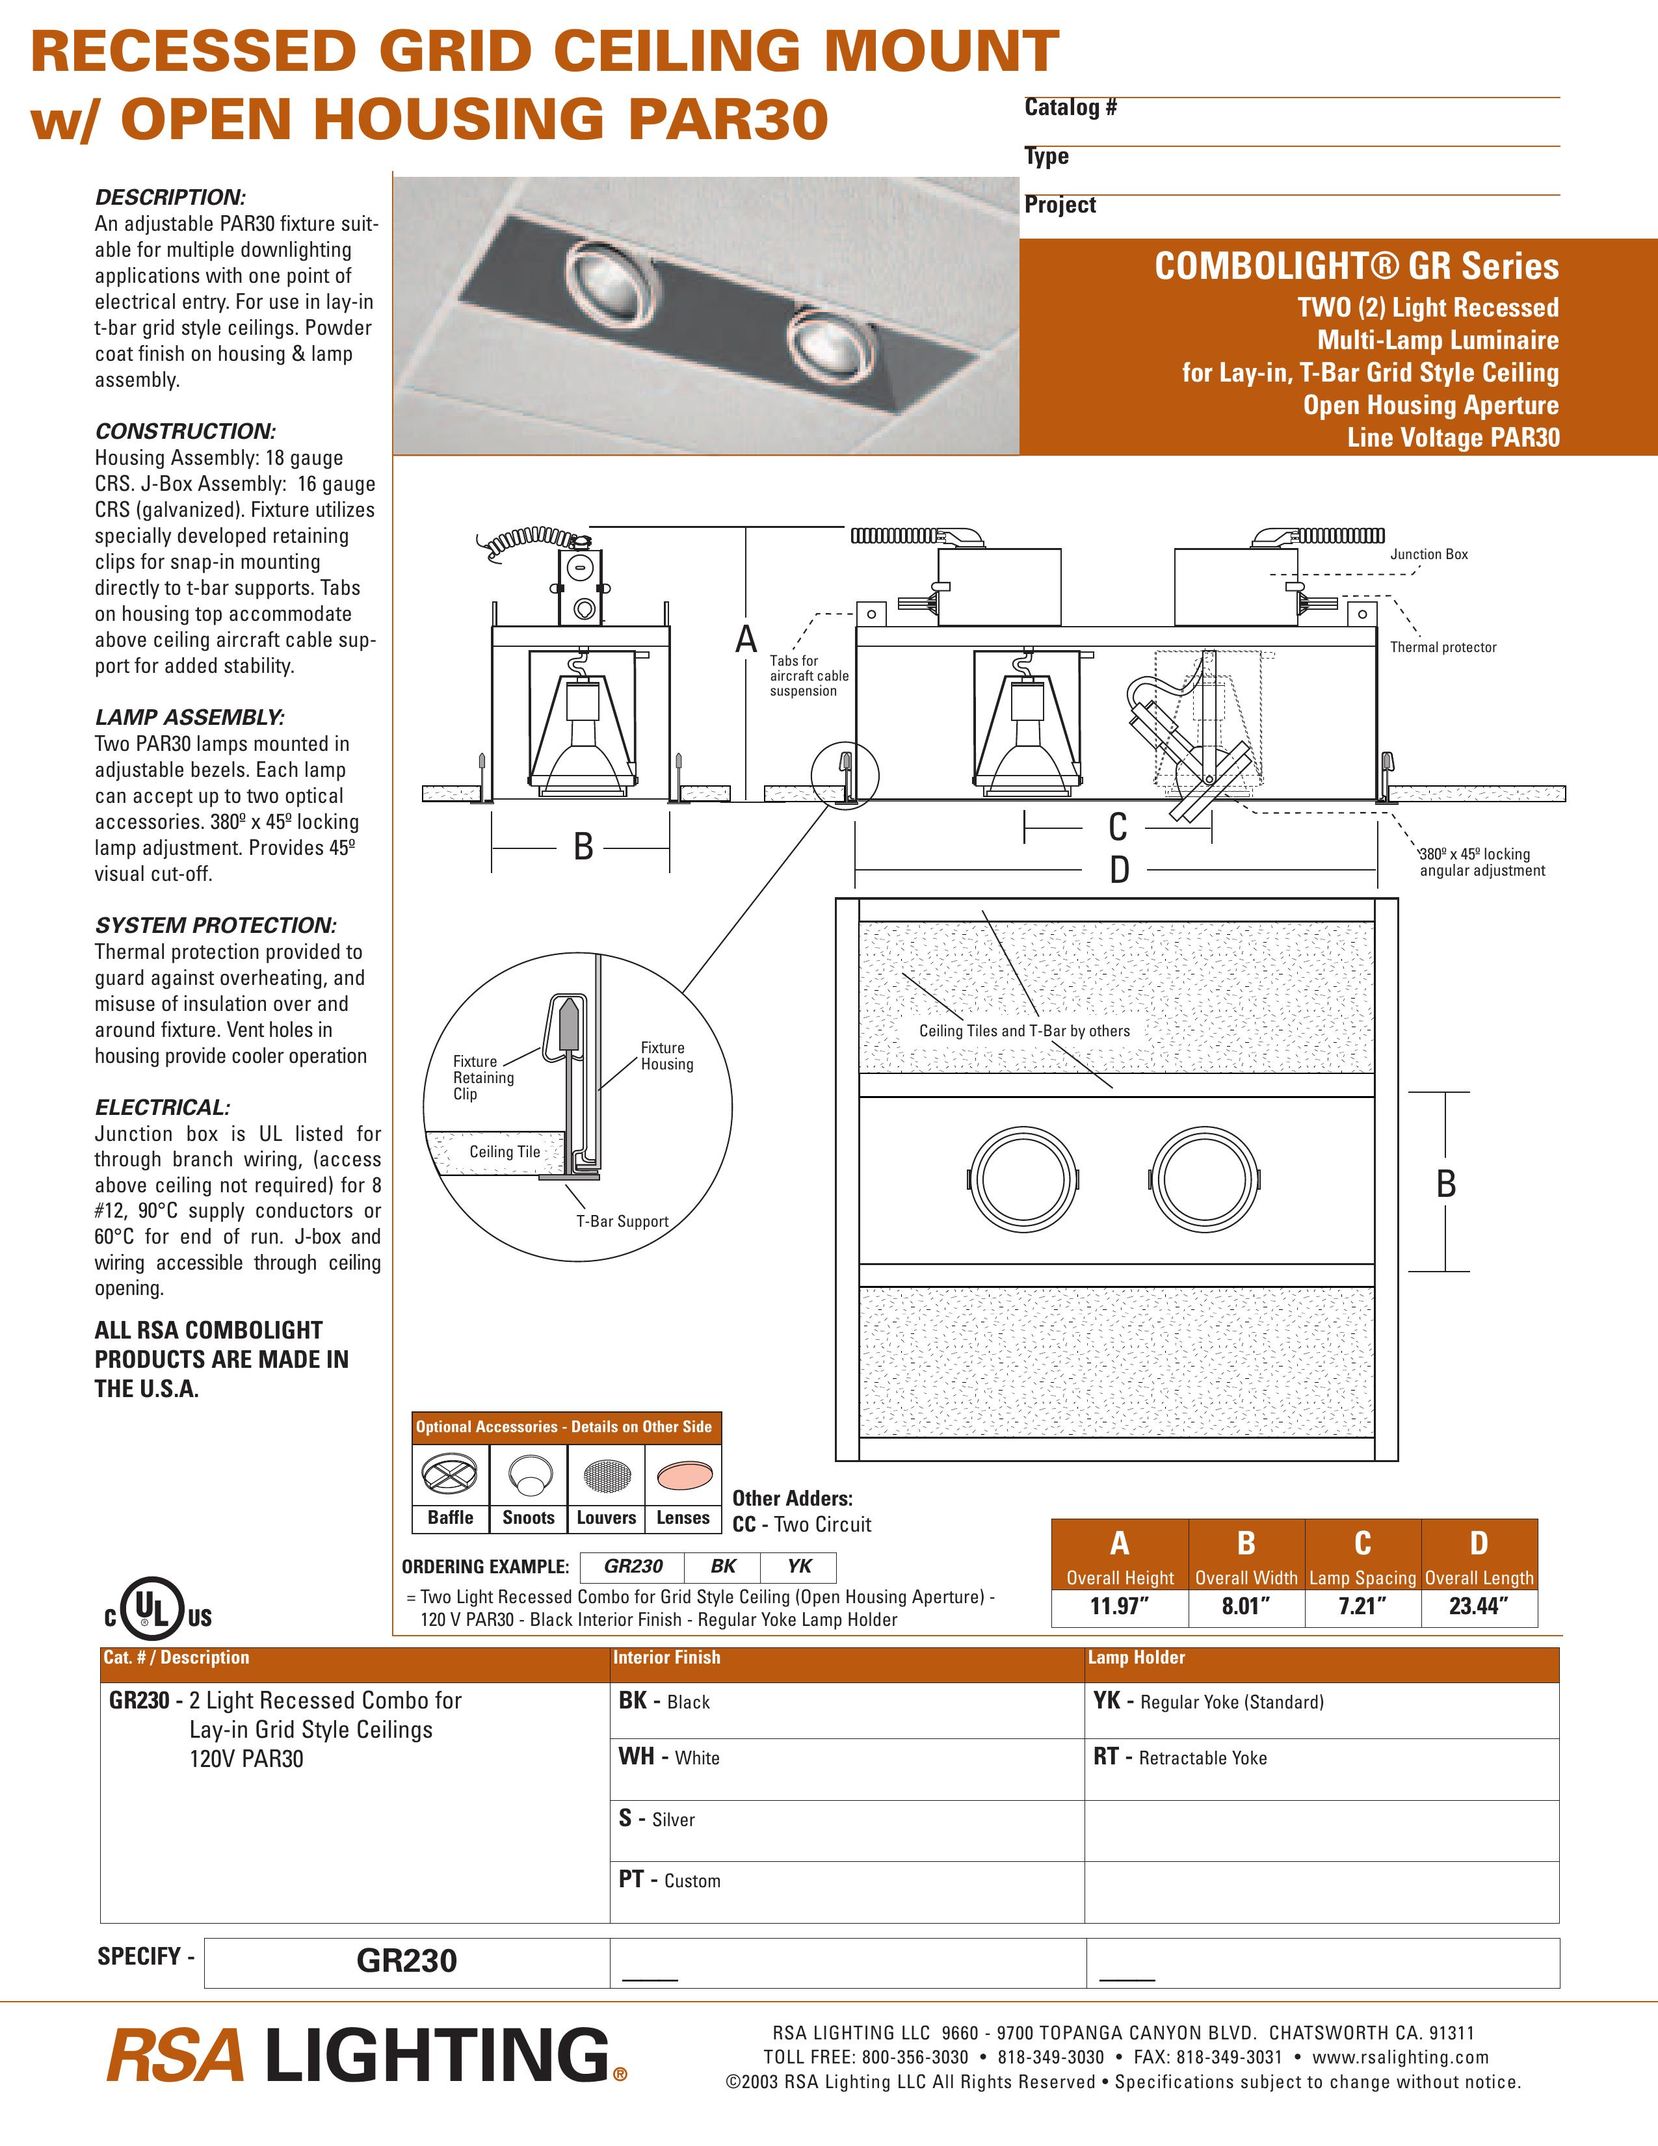 RSA Lighting PAR30 Indoor Furnishings User Manual